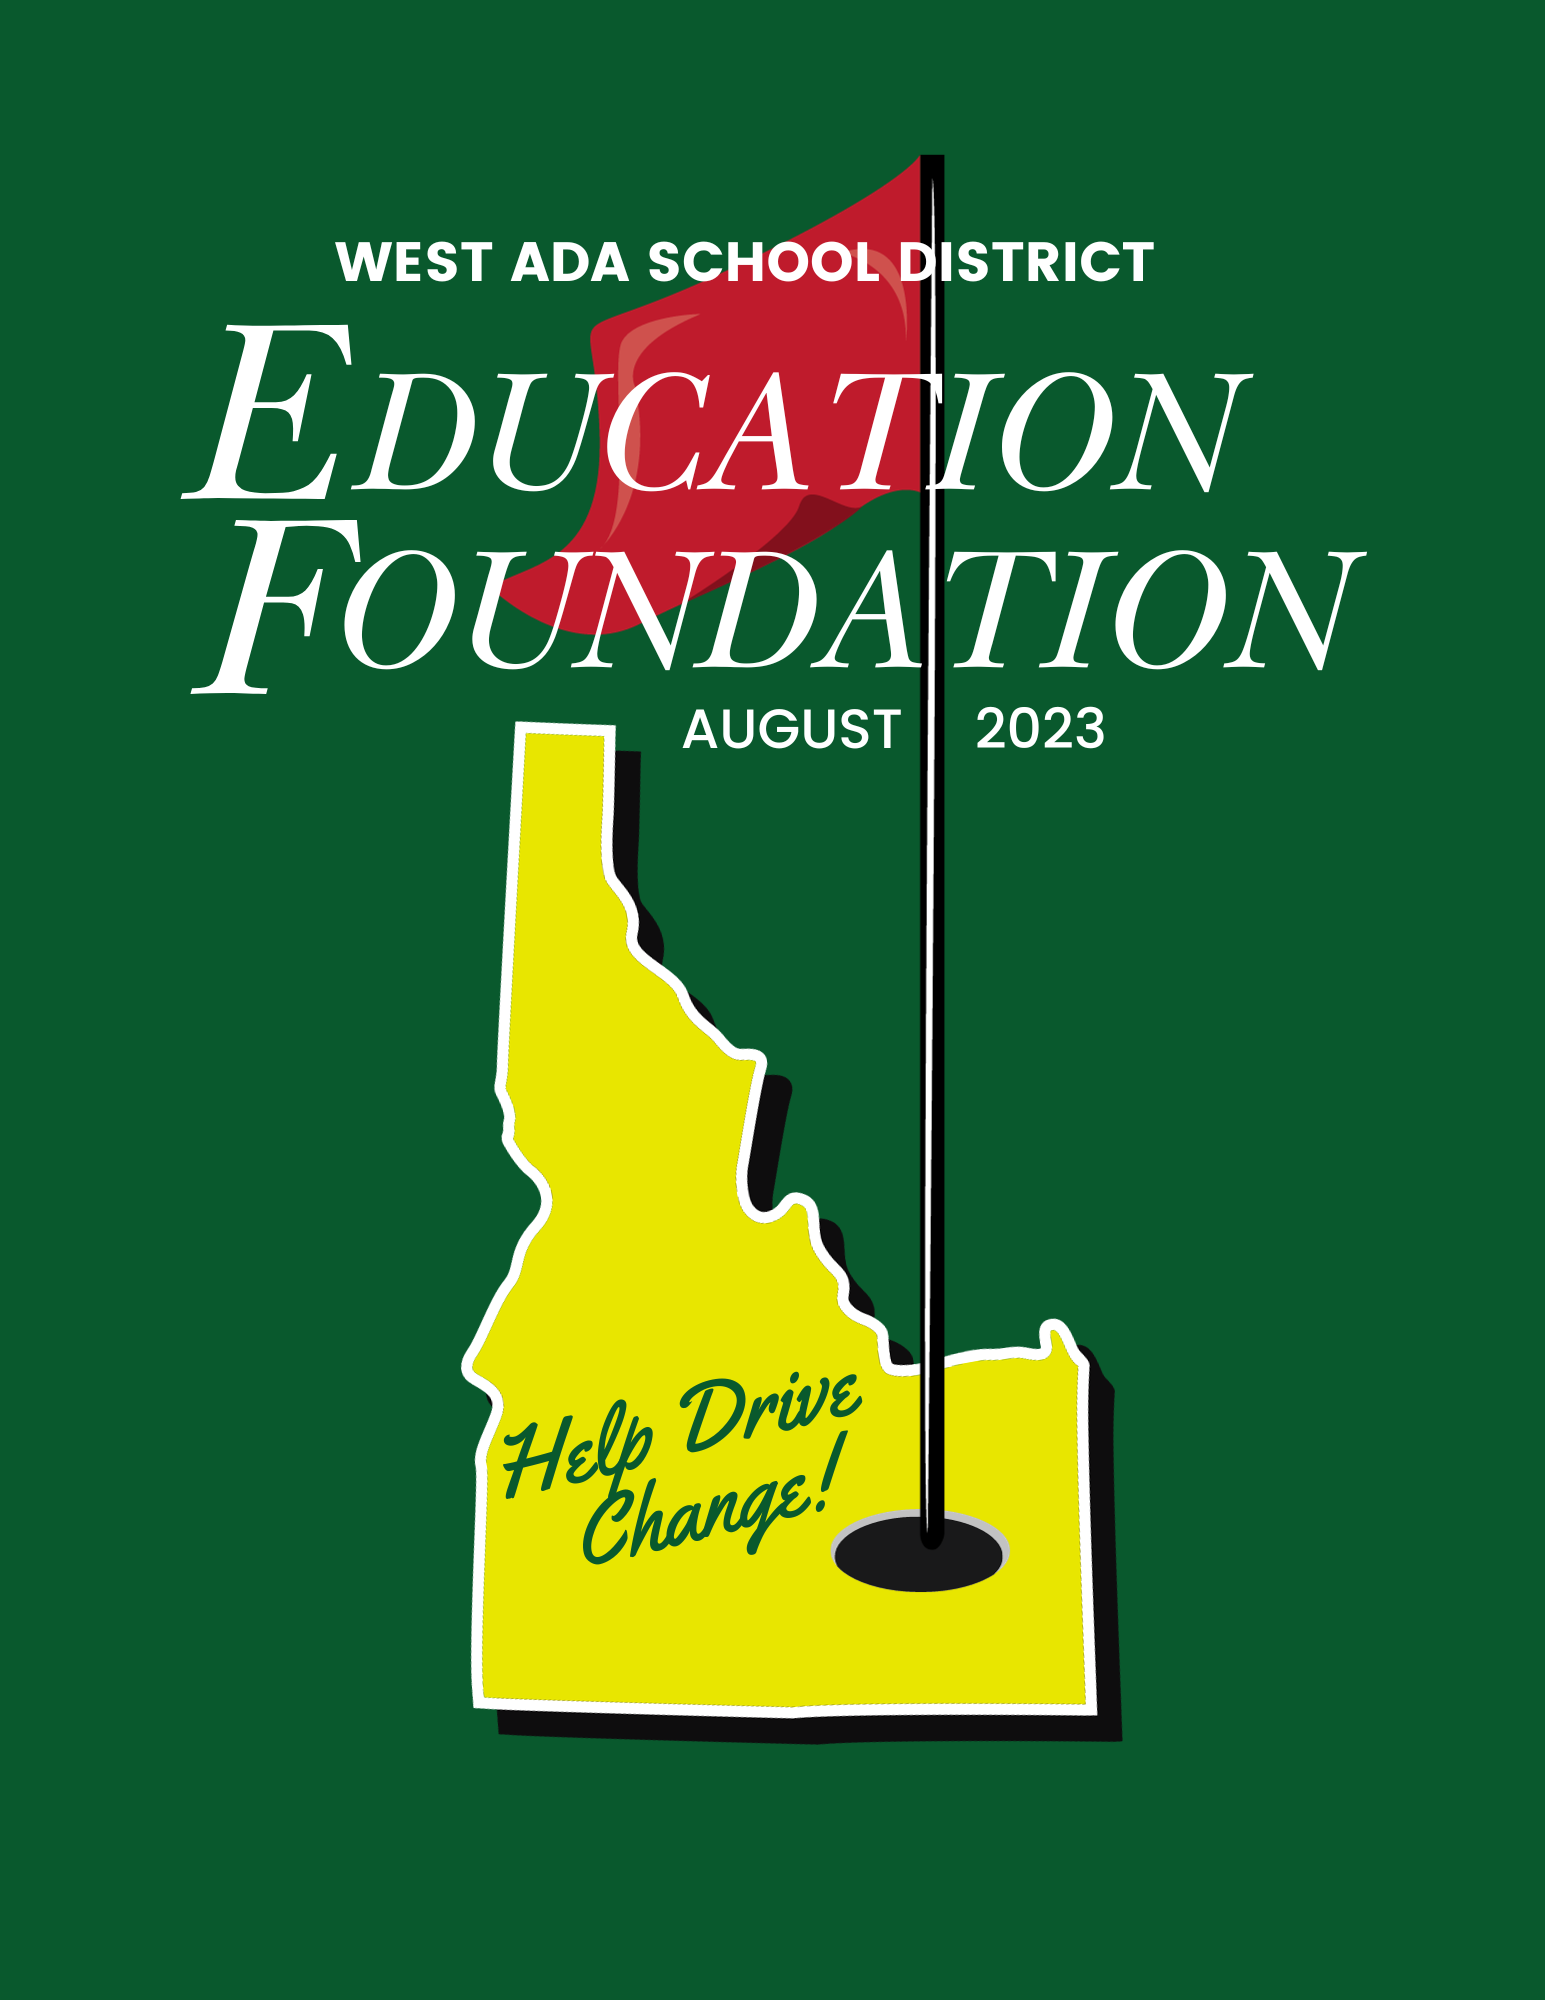 west ada school district education foundation 2023 - help drive change